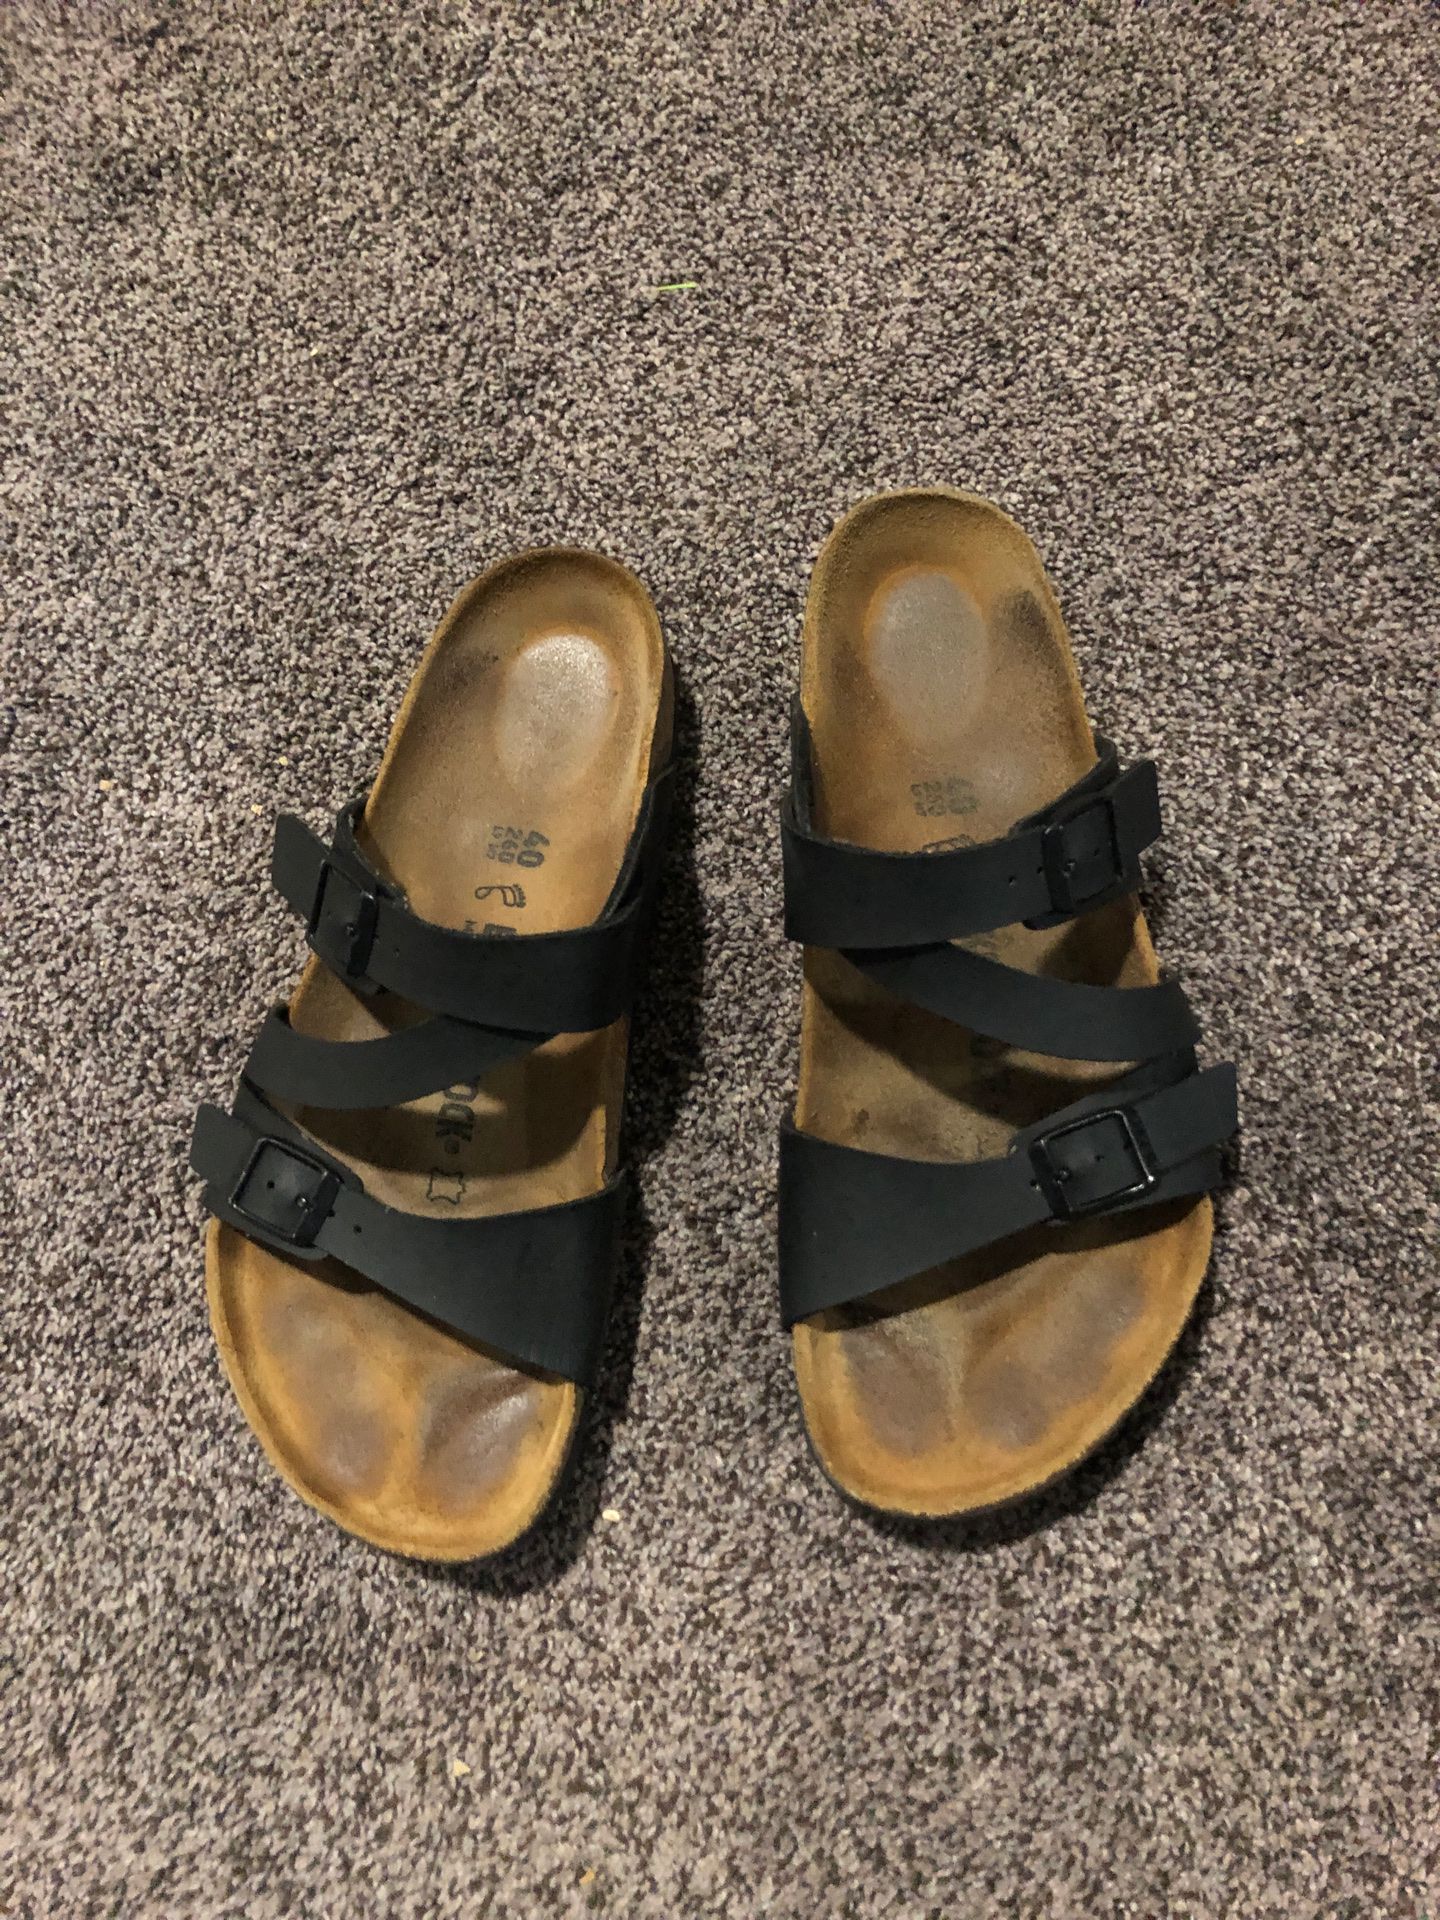 Birkenstock sandals” Salina birko-flor Black” size 40. $35.00